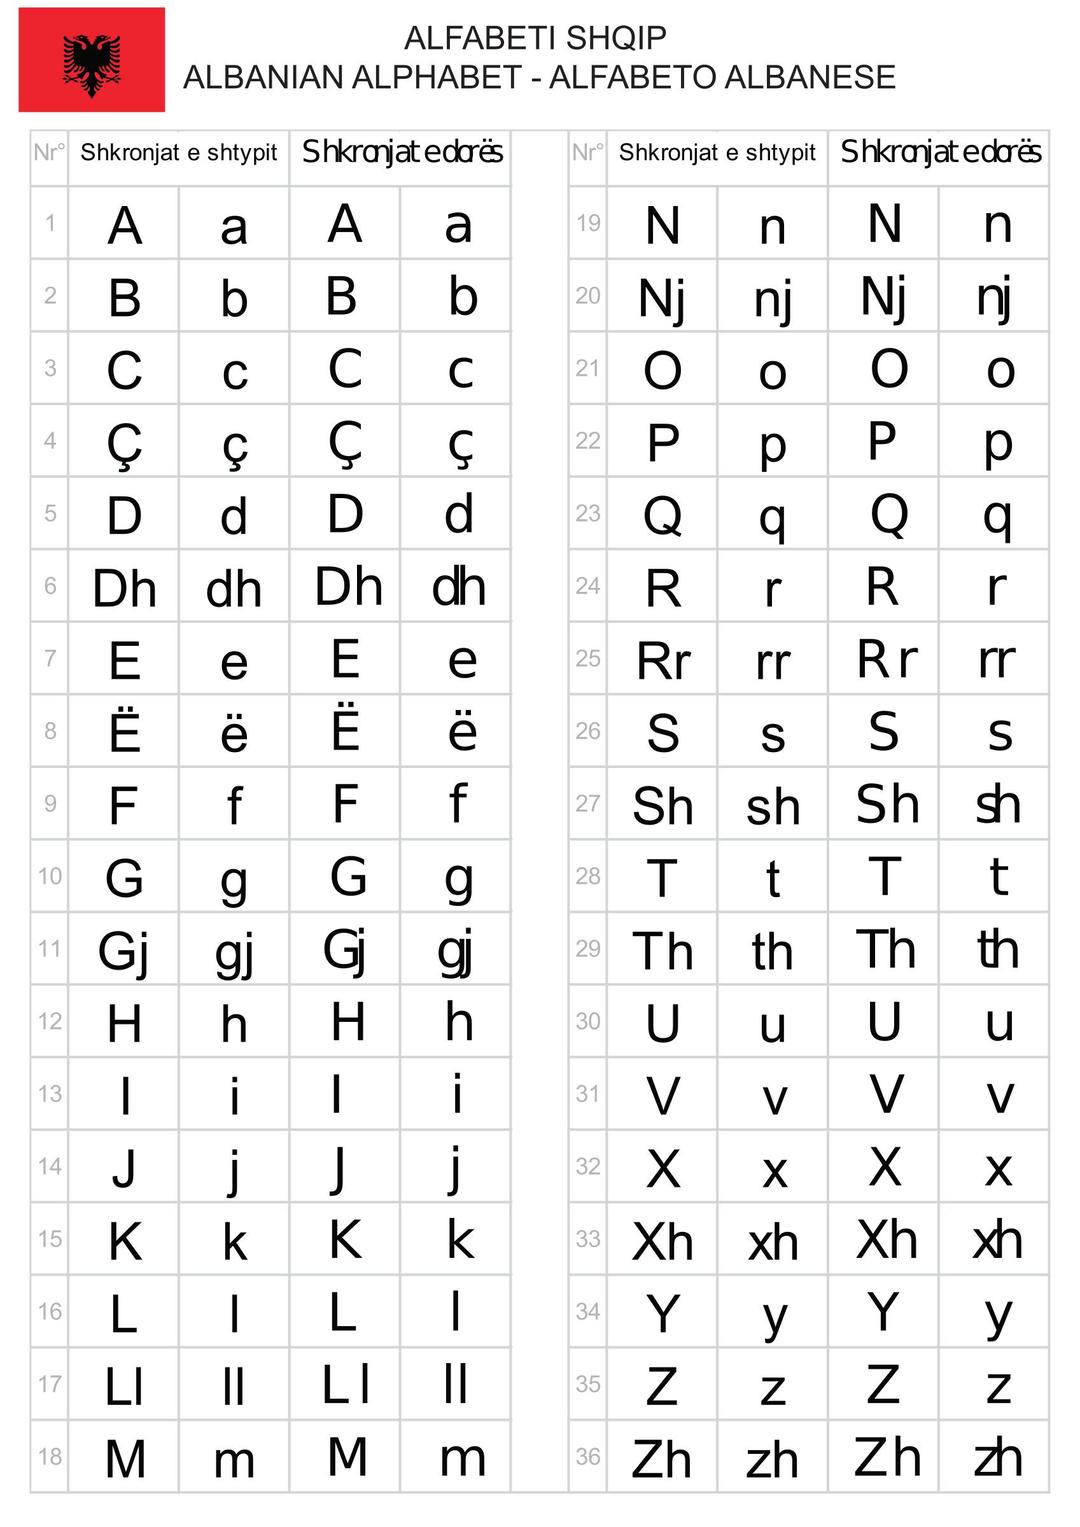 Albanian alphabet - Alfabeti shqip png transparent